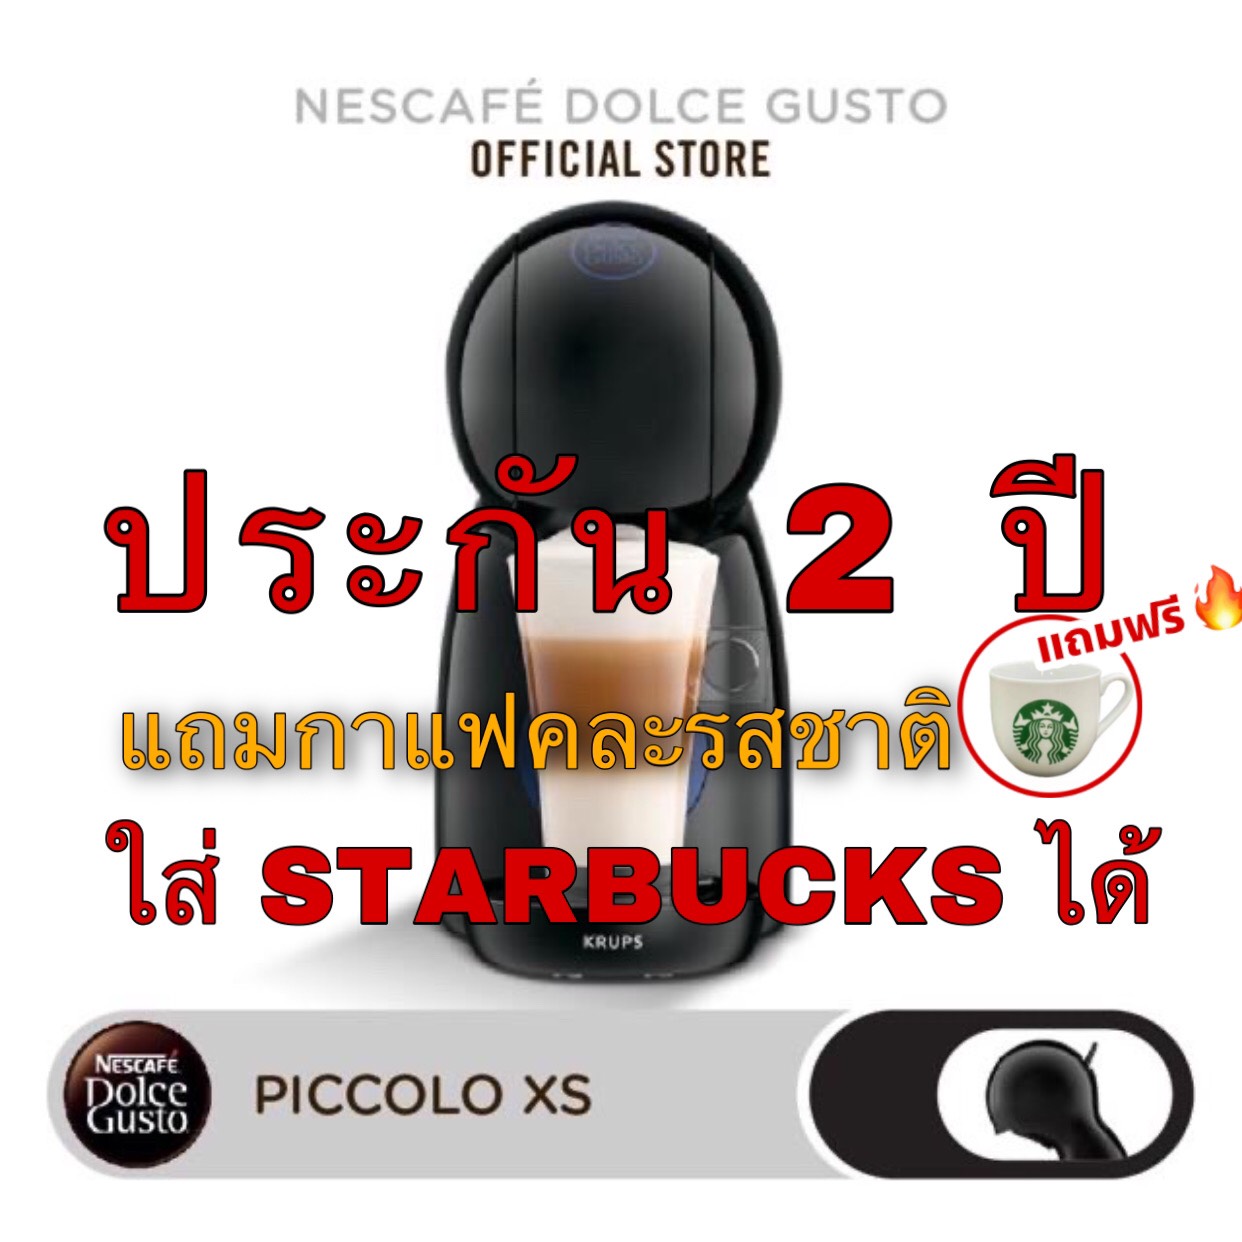 KRUPS Nescafé Golce Gusto รุ่น Piccolo XS ใส่ STARBUCKS ได้พร้อมของแถมกาแฟคละรสชาติ